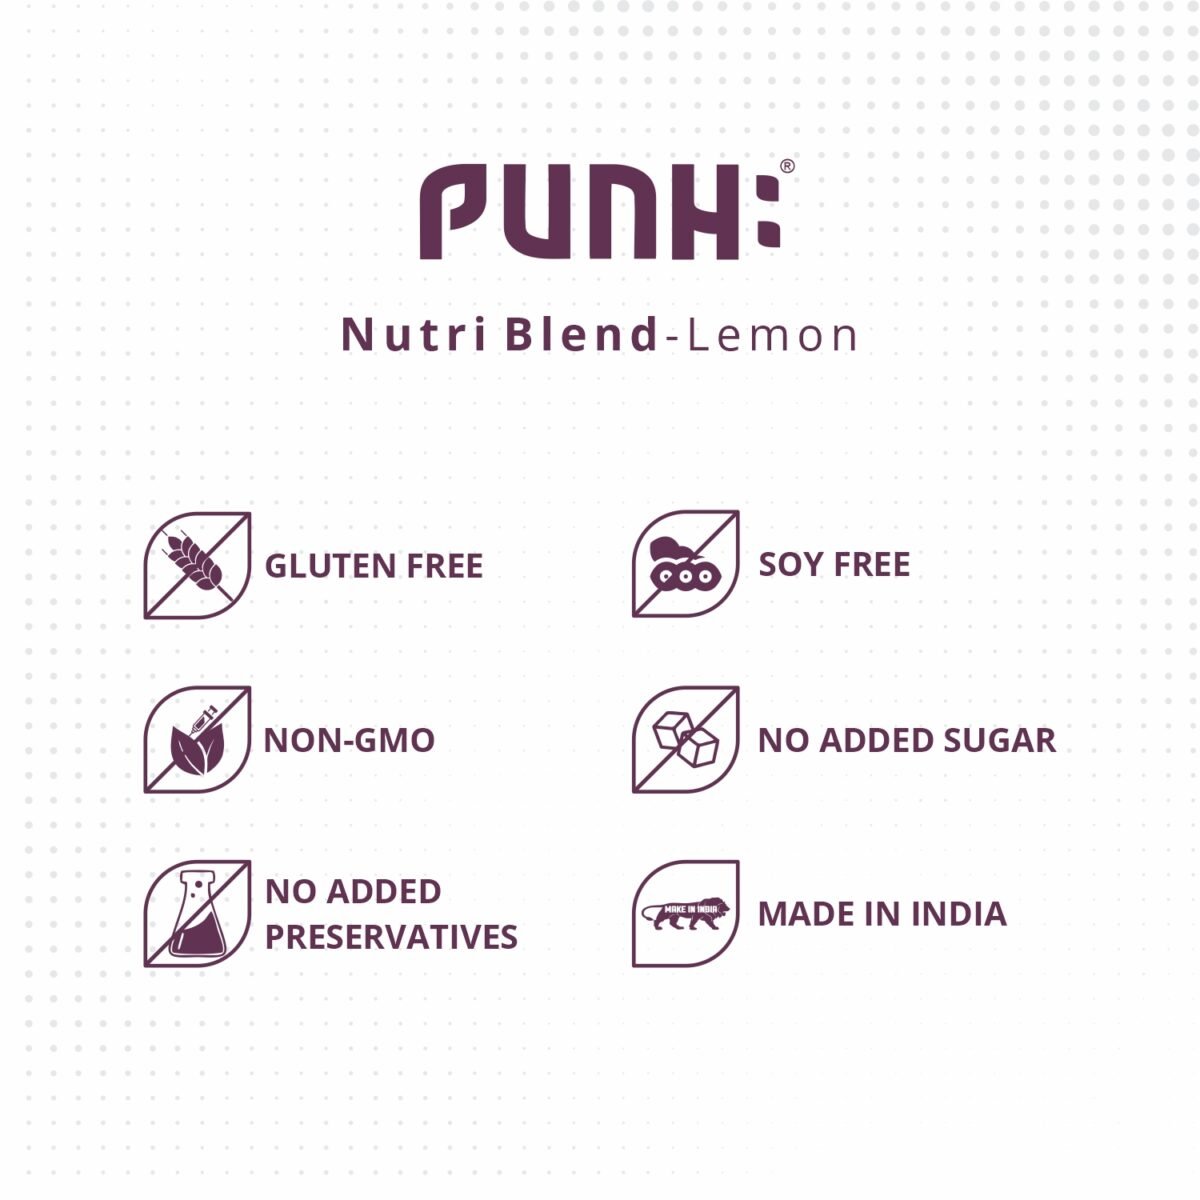 Punh Nutri Blend Lemon Claims